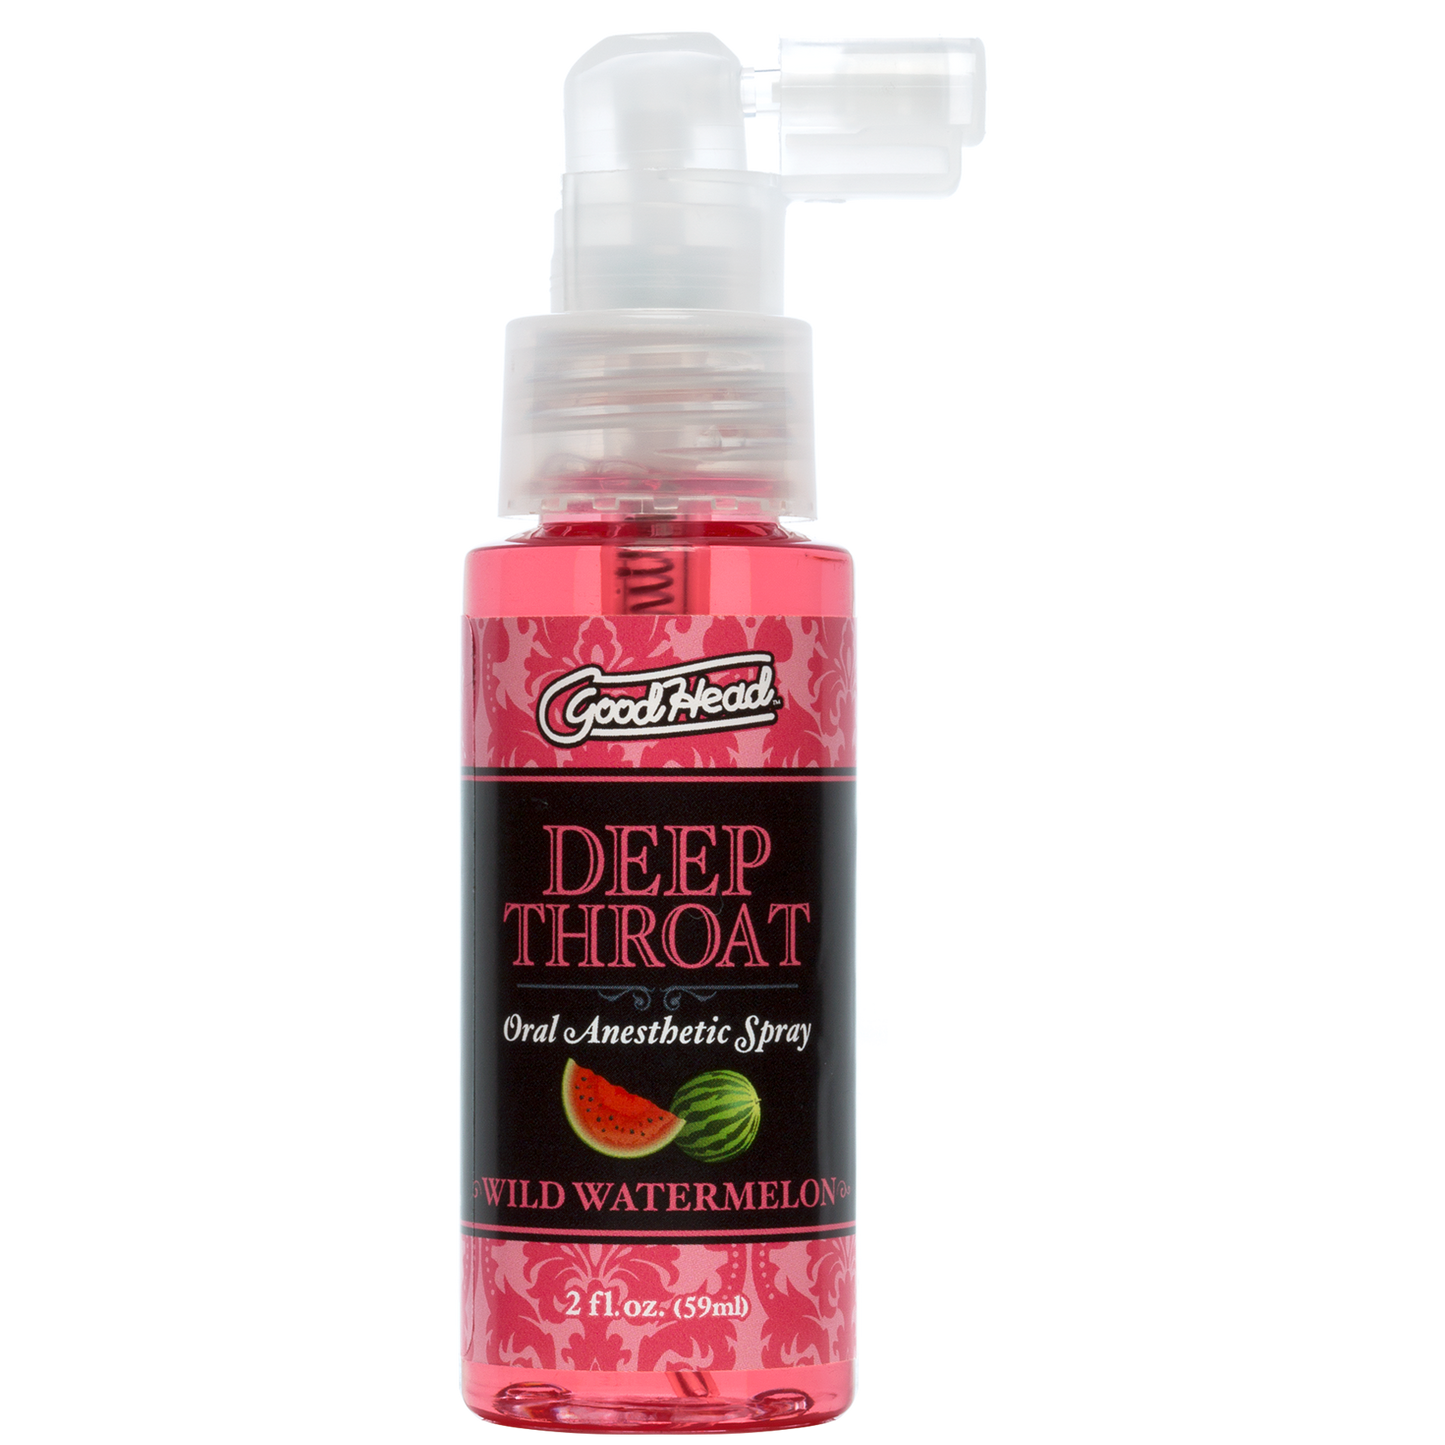 Deep Throat Oral Anesthetic Spray 2oz (watermelon).